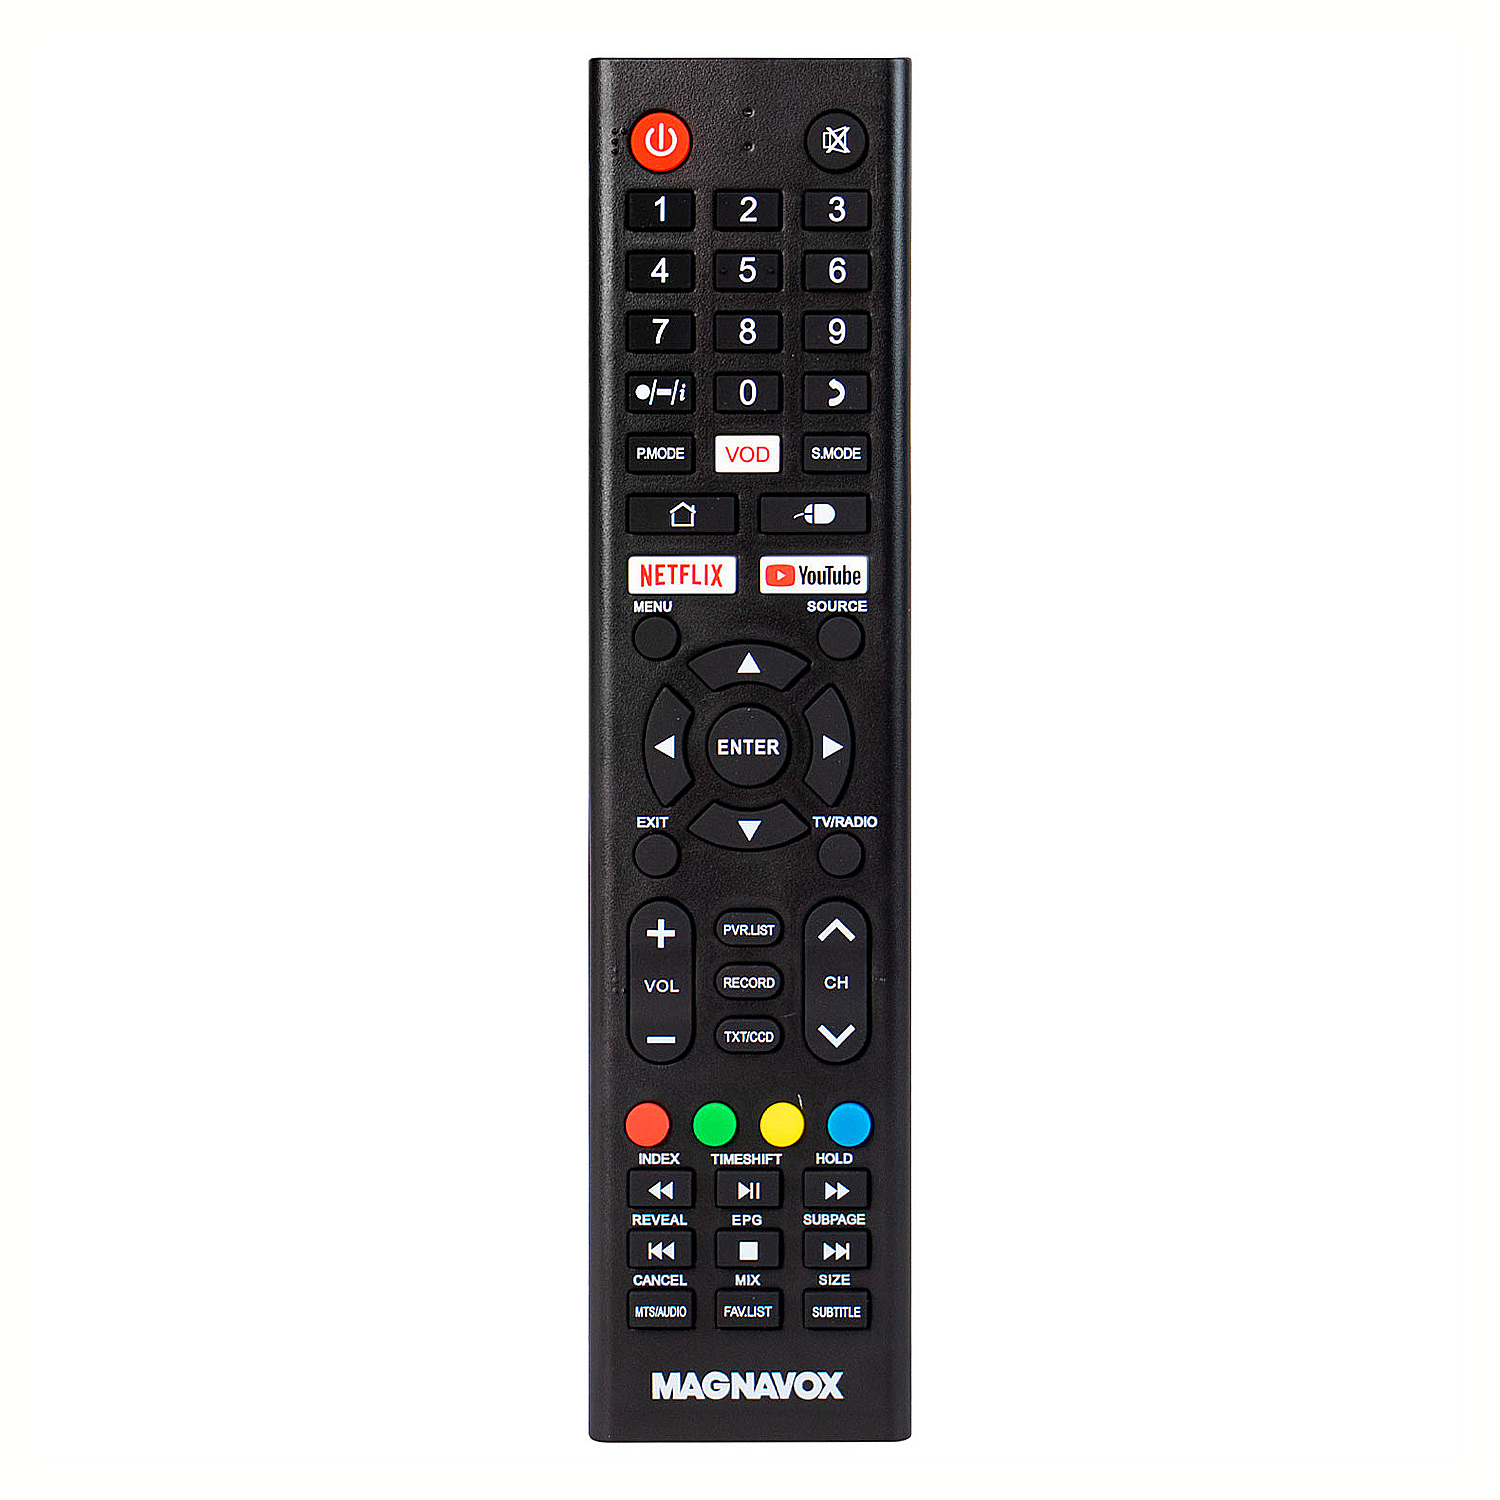 Smart TV Magnavox  43MEZ443/M1 43" Full HD Android WiFi - Preto